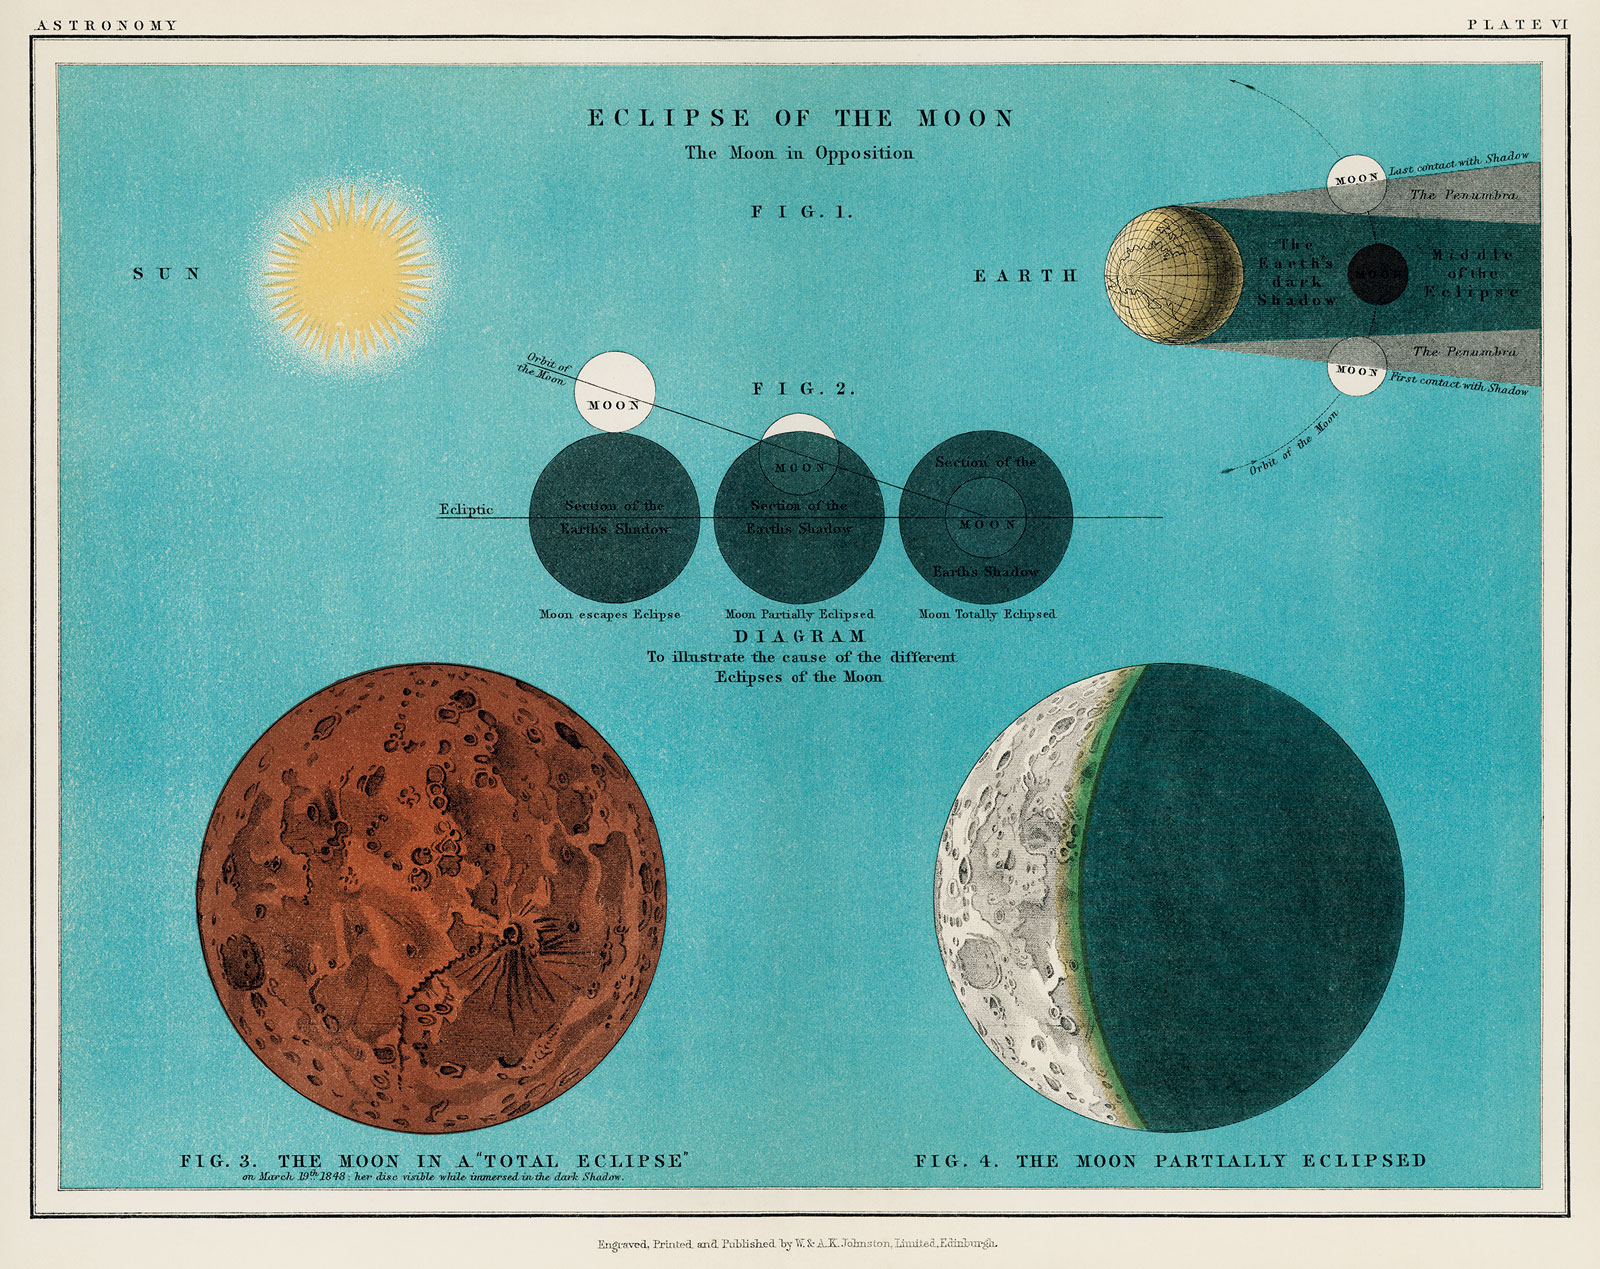 W. & A.K. Johnston, *Eclipse de Luna*, 1908 